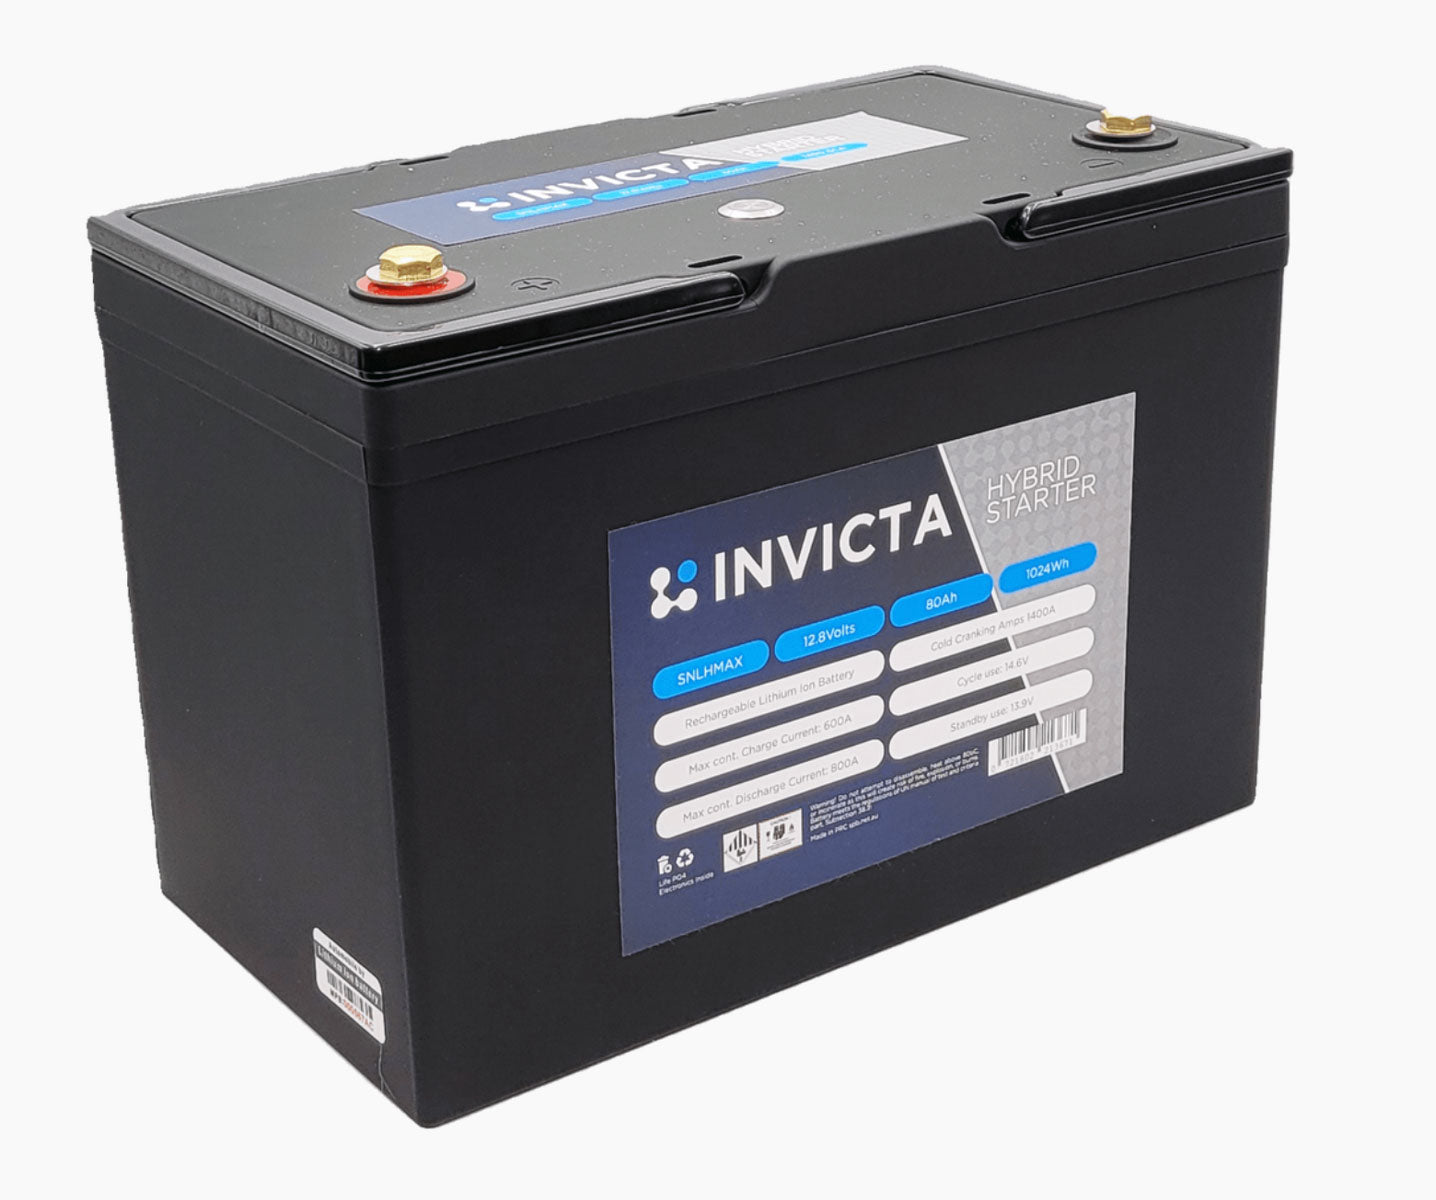 Invicta Hybrid Starter Battery